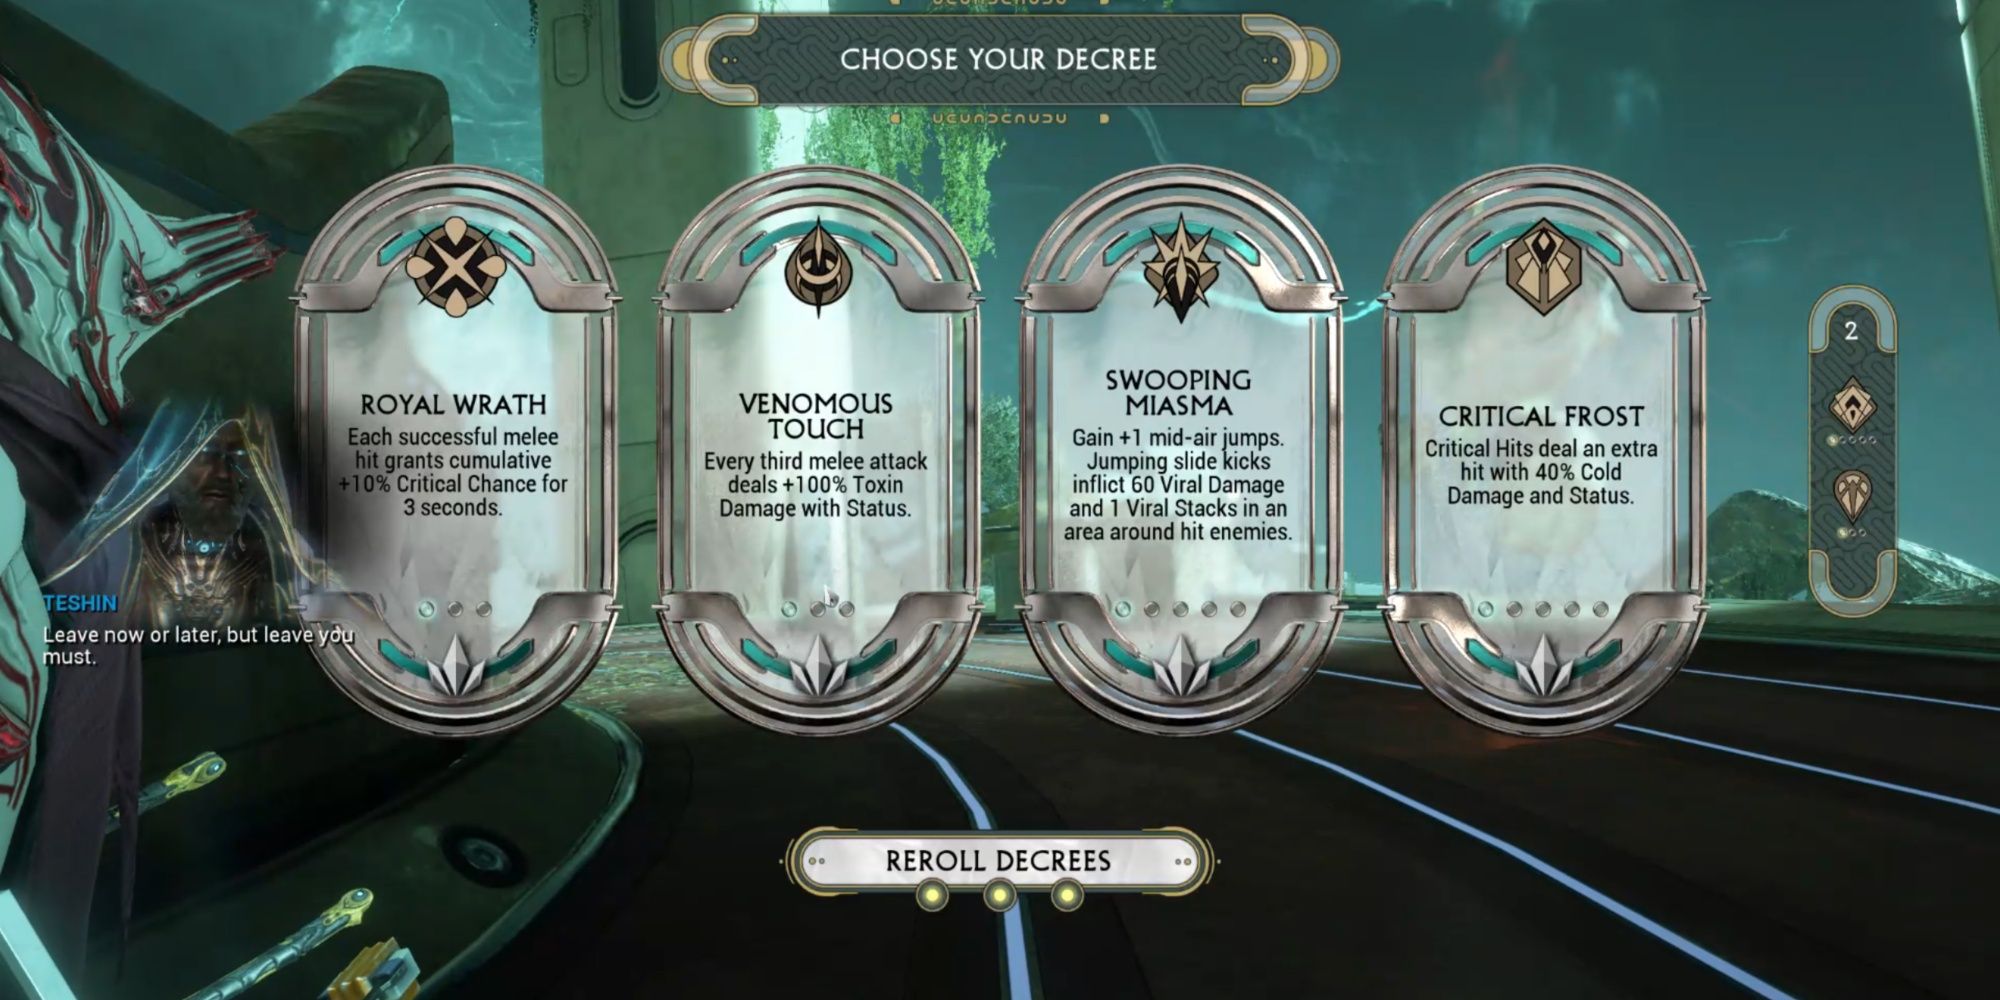 Warframe Venomous Touch decree in "Choose Your Decree" screen.